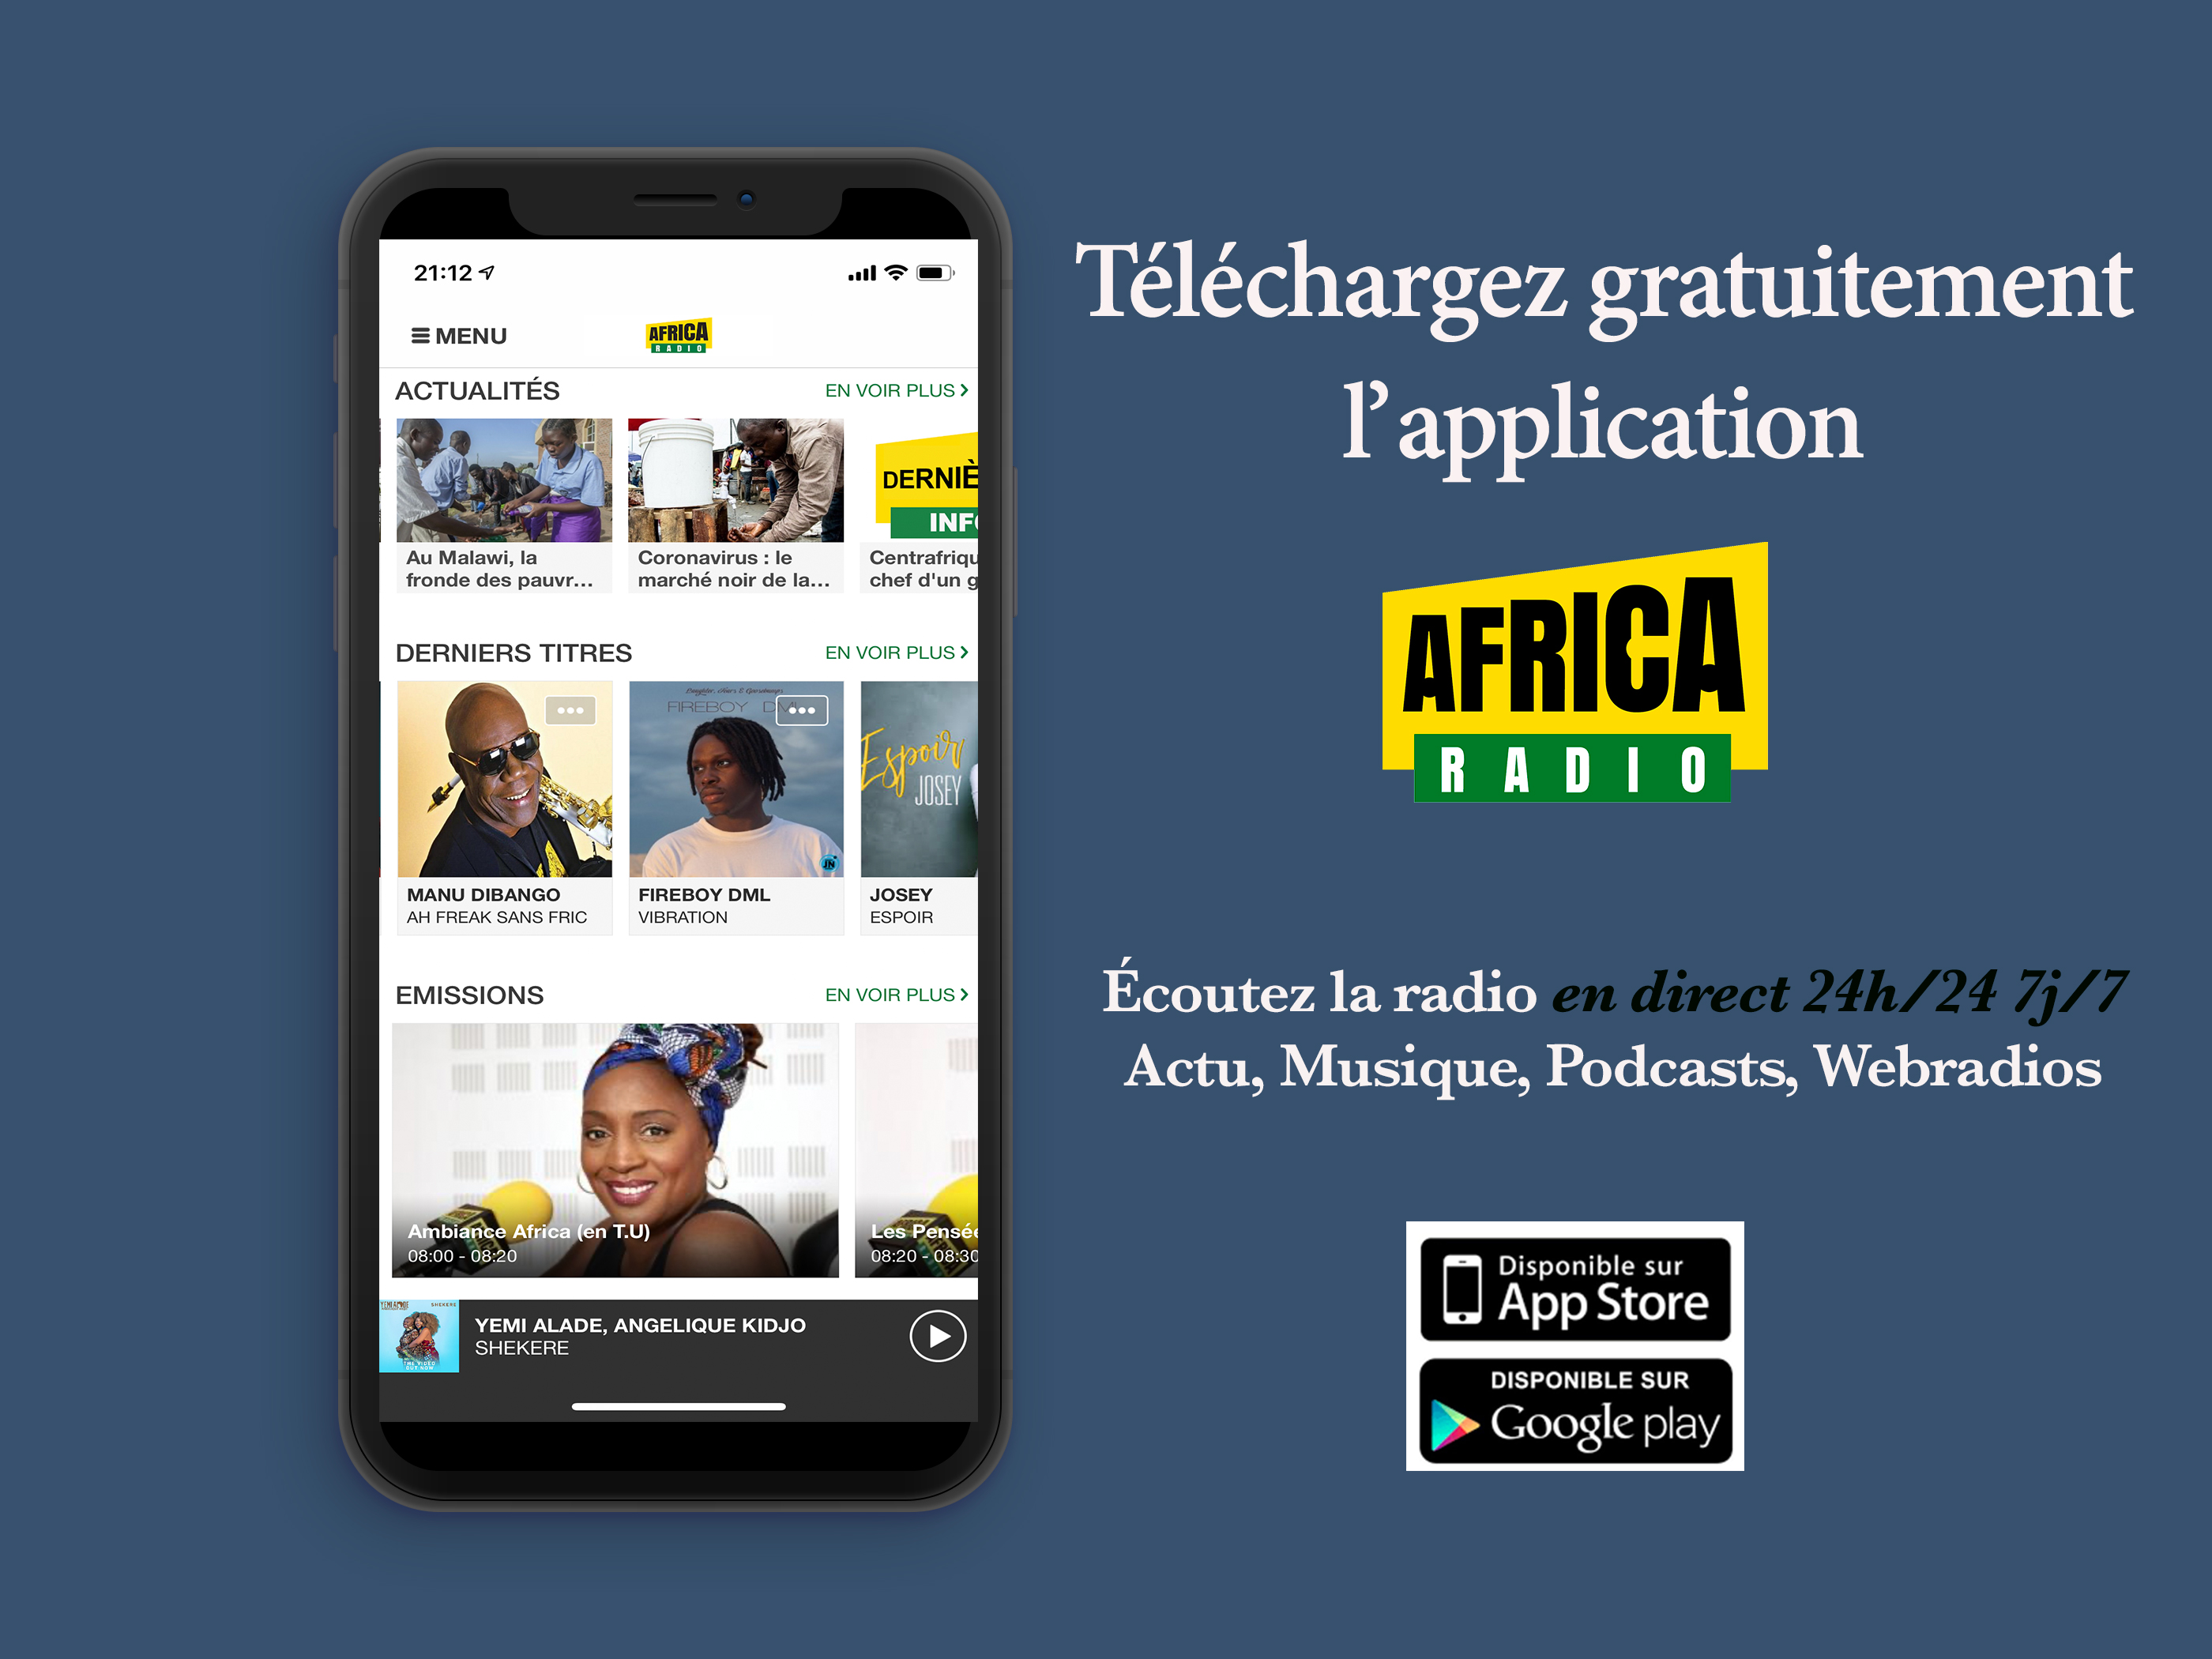 application-africaradio.jpg (1.07 MB)